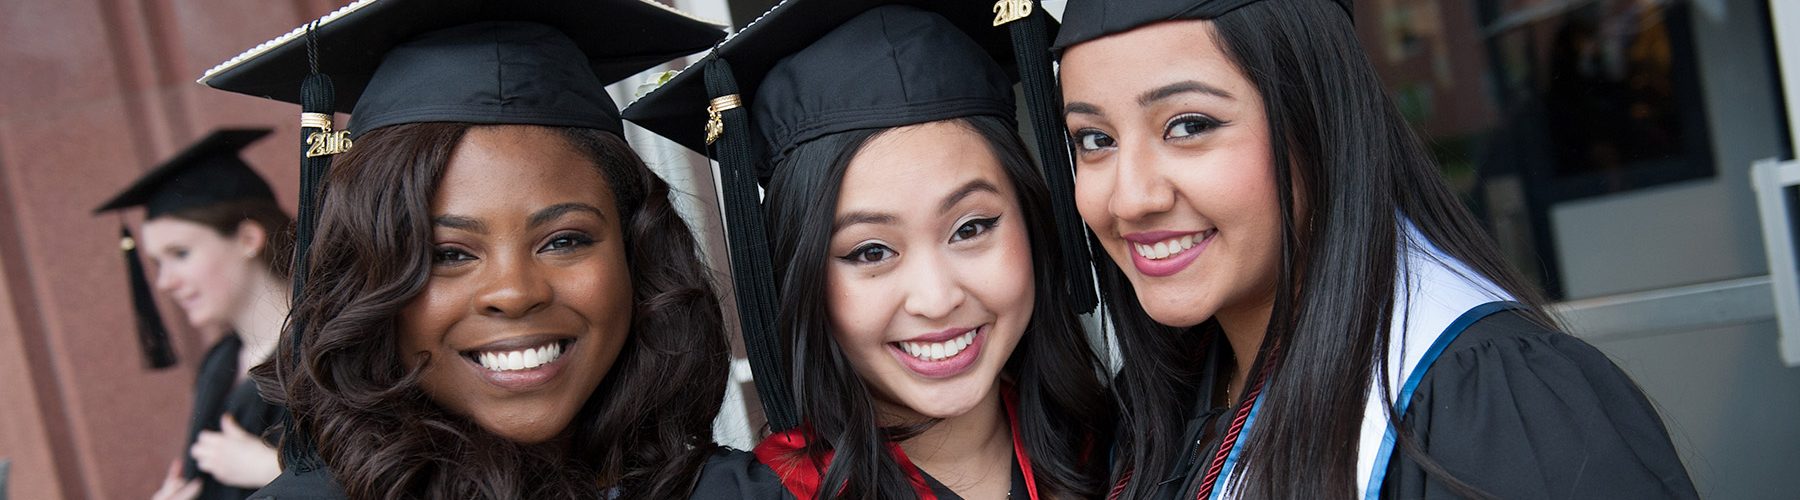 3 female students at graduation